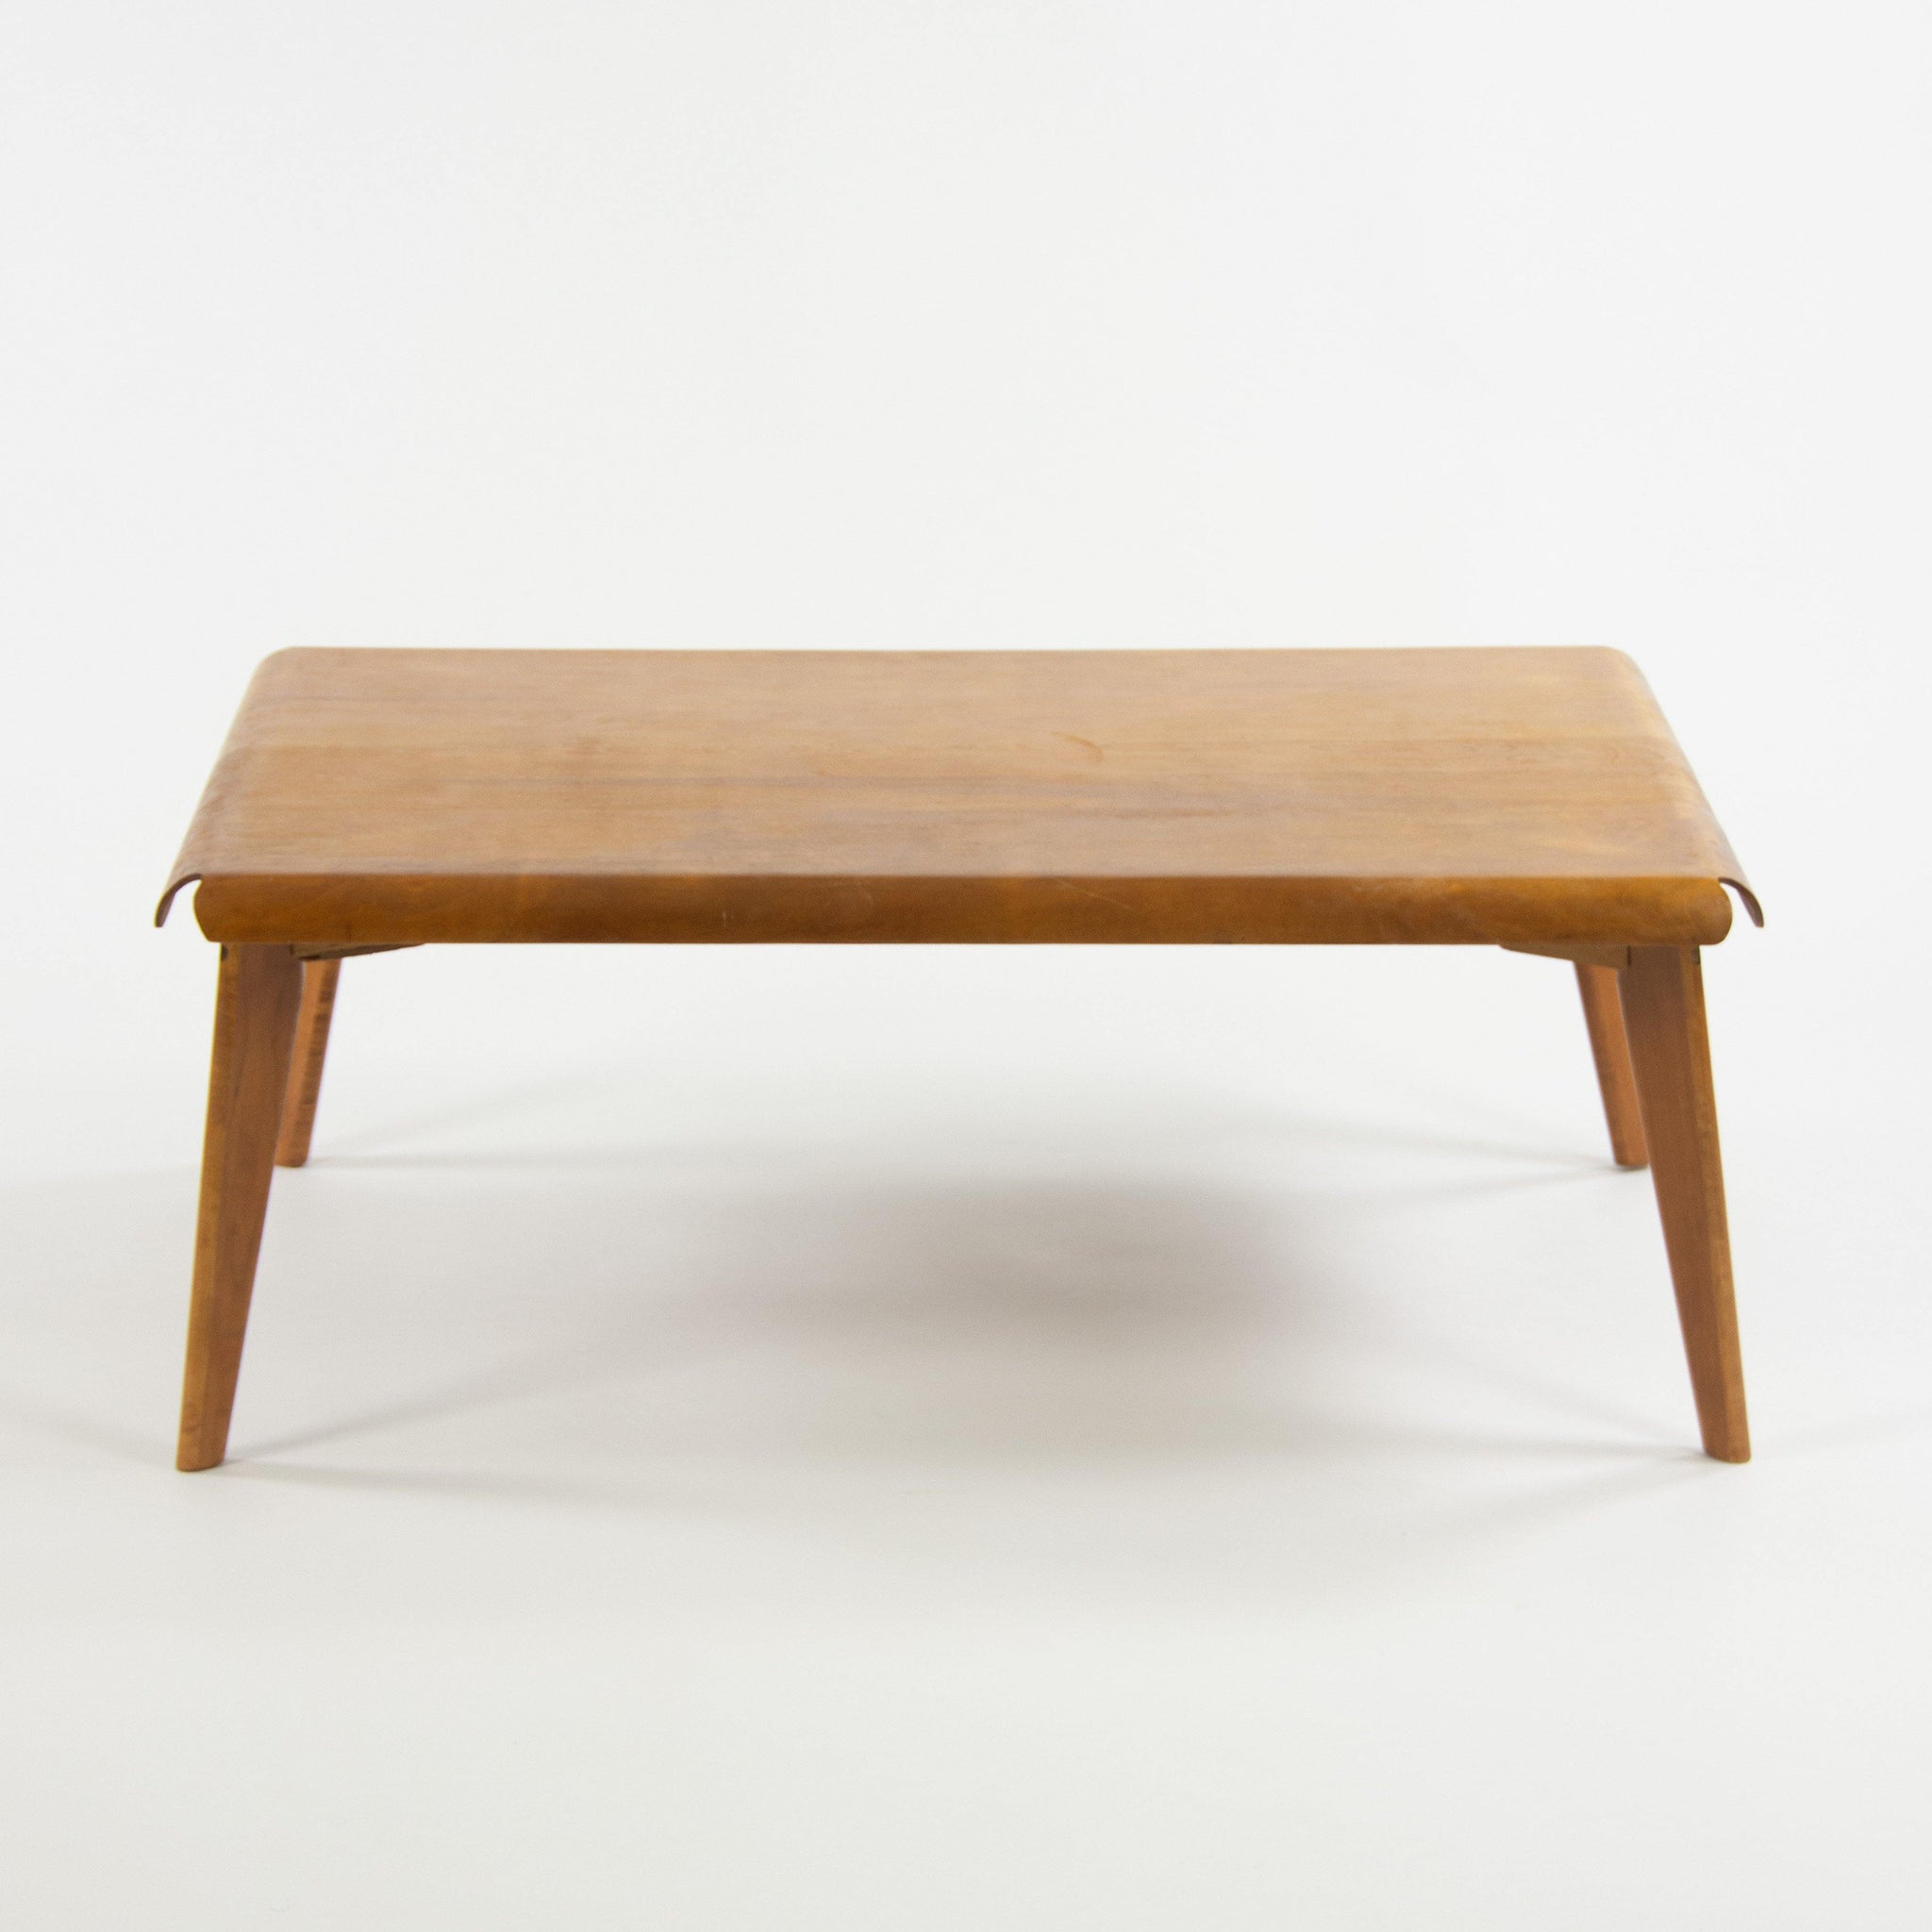 1945 Eames Evans Experimental Molded Plywood Coffee Table - Rarify Inc.